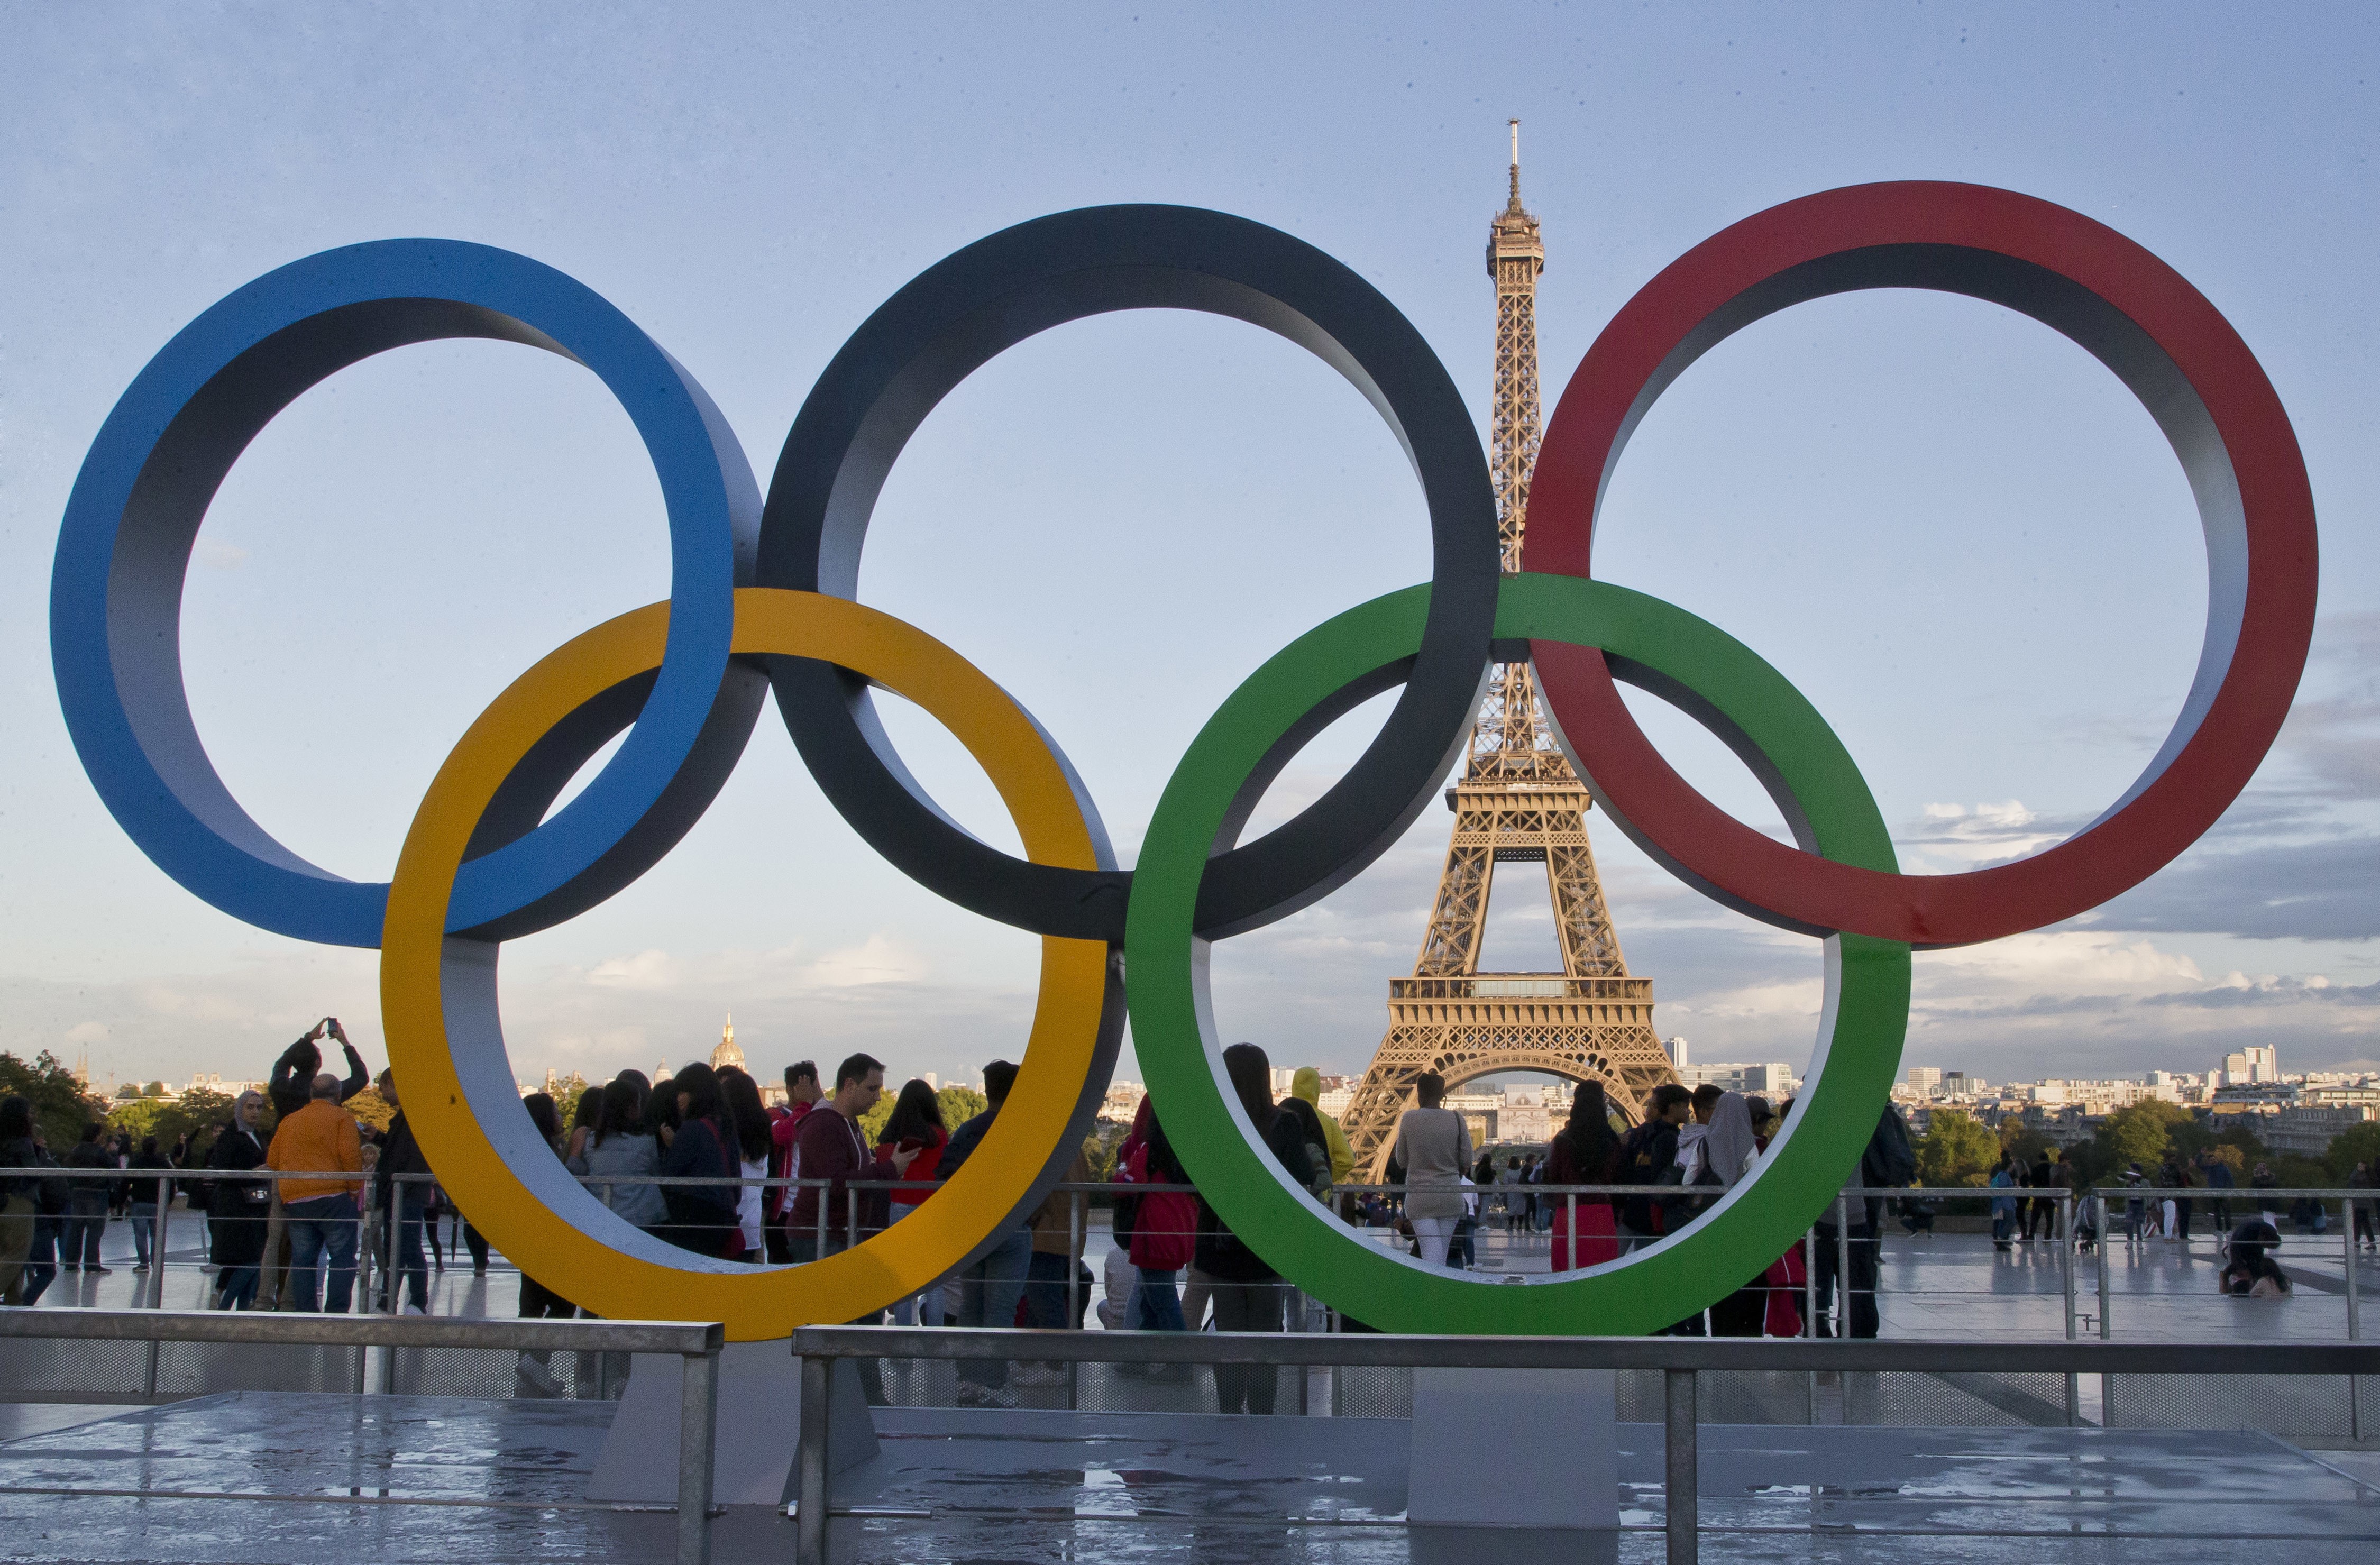 LVMH strikes Paris Olympic Games sponsorship deal - anews